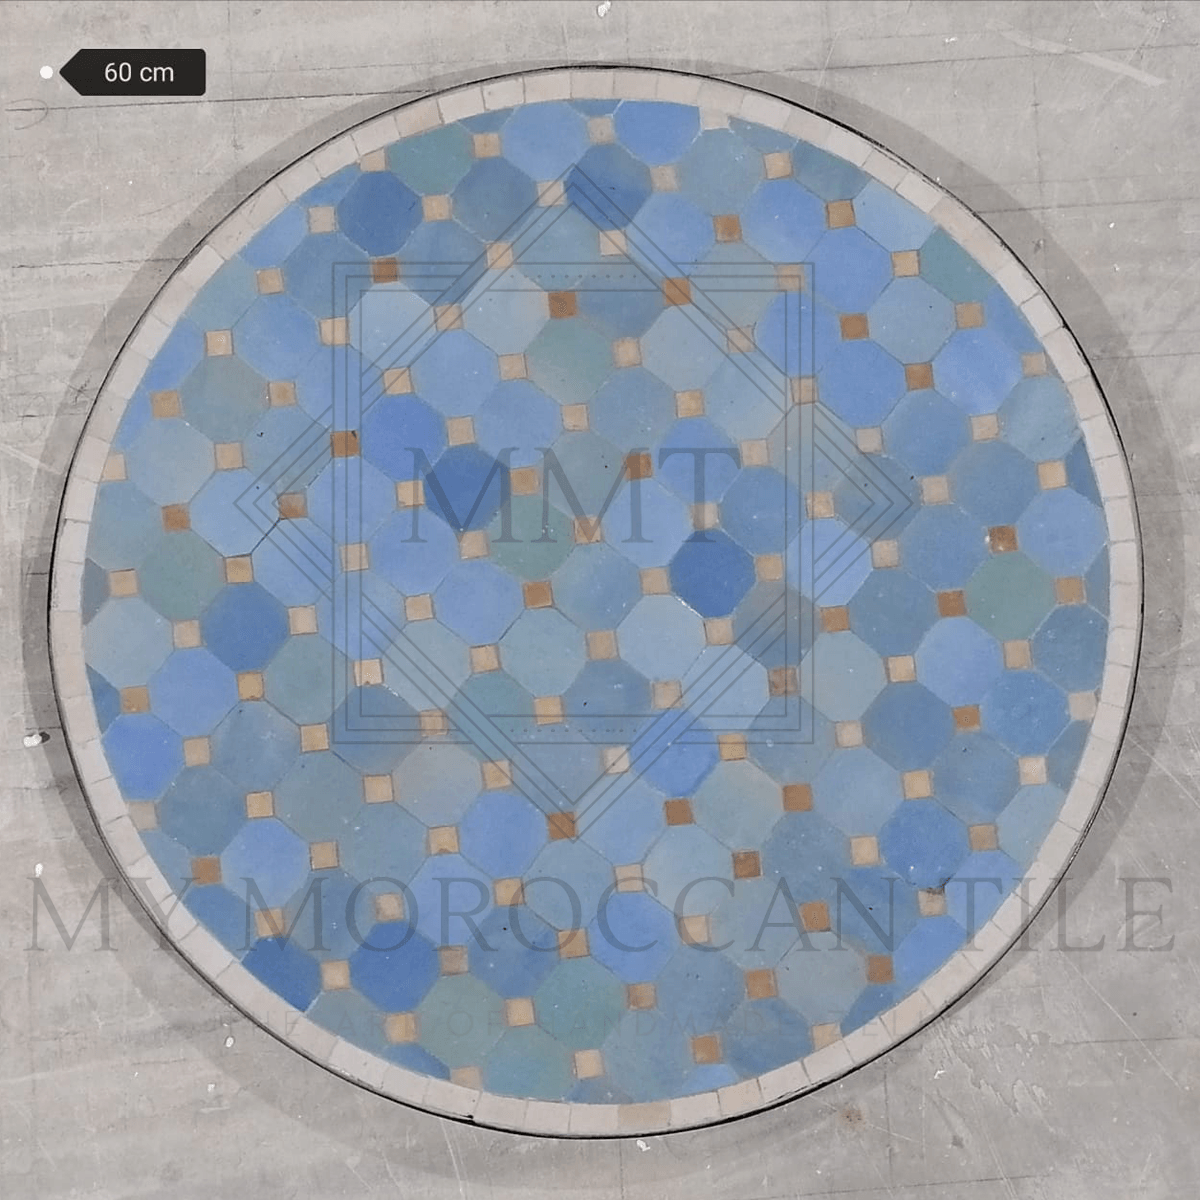 Handmade Moroccan Mosaic Table 2188-06